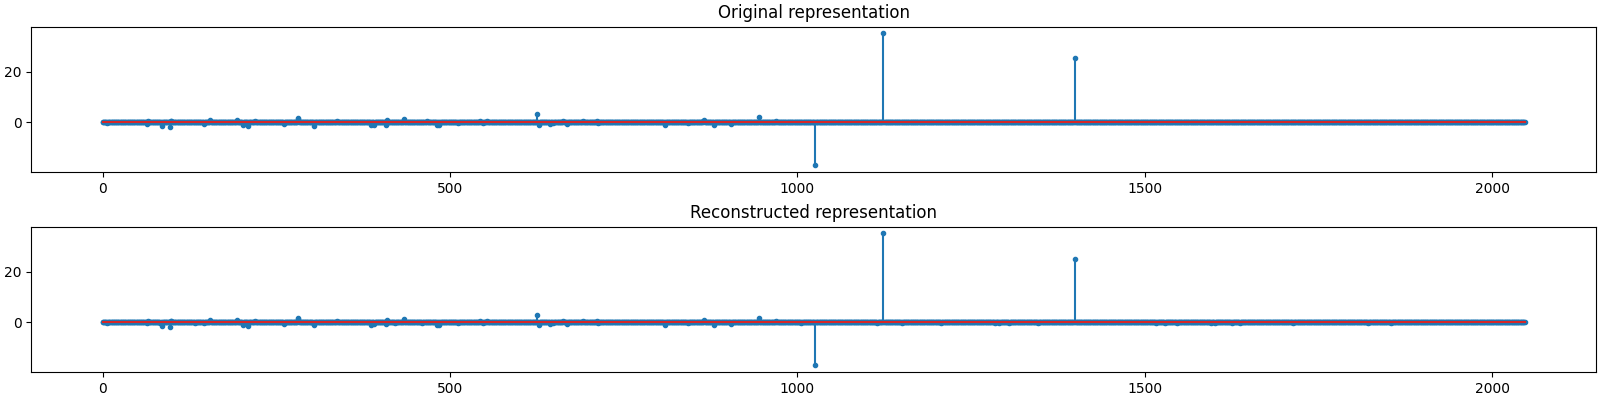 Original representation, Reconstructed representation